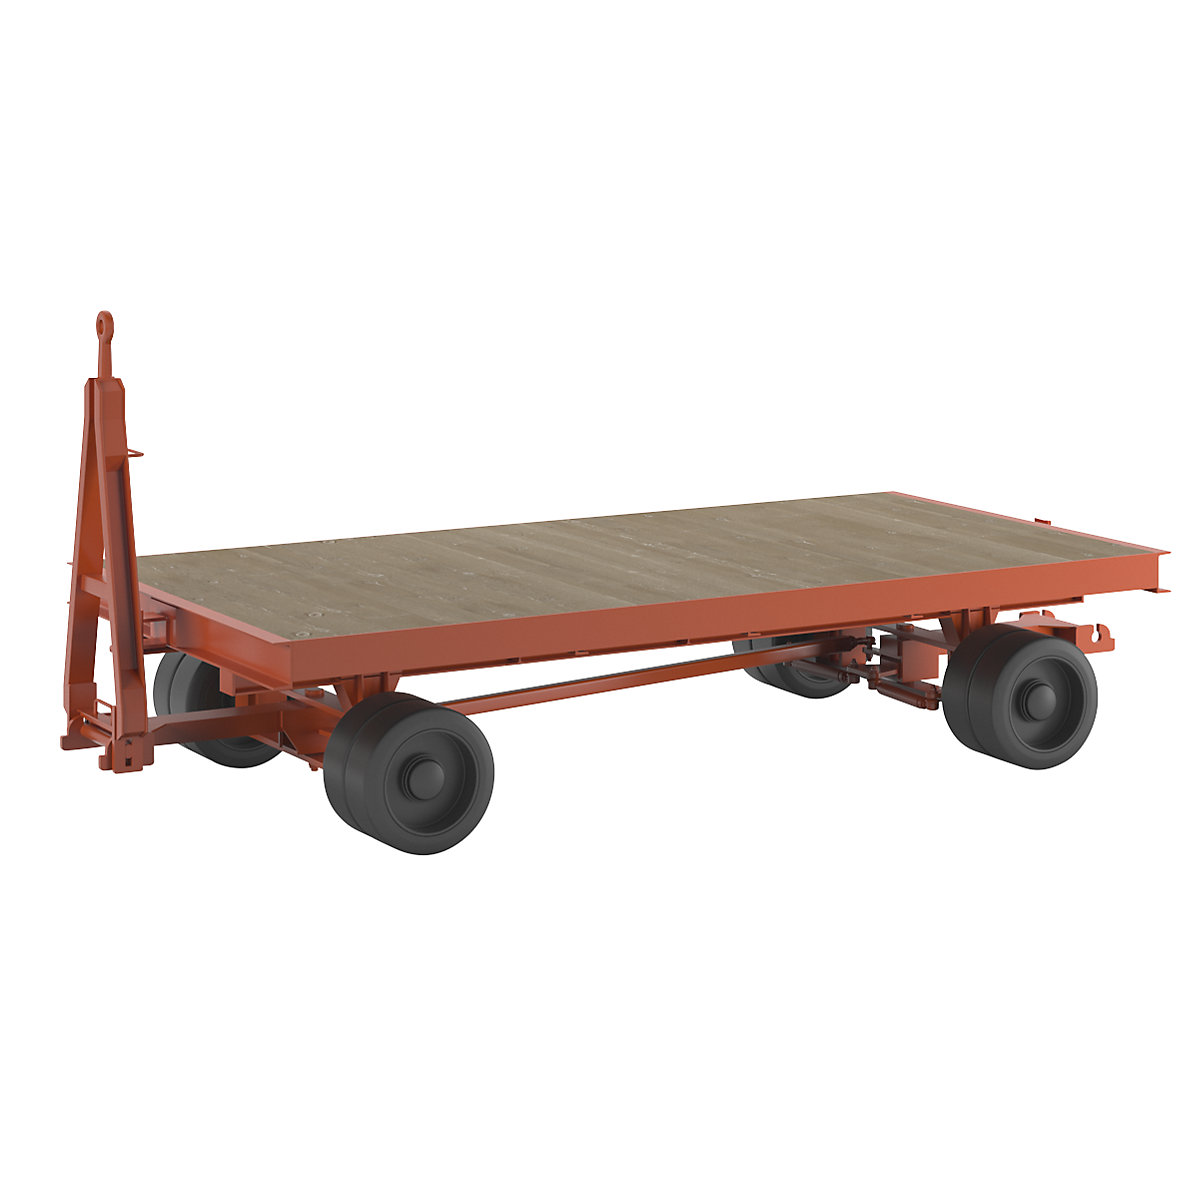 Heavy goods trailer, 16 t, 4 wheel linked ackermann steering, platform 3.2 x 1.6 m-1